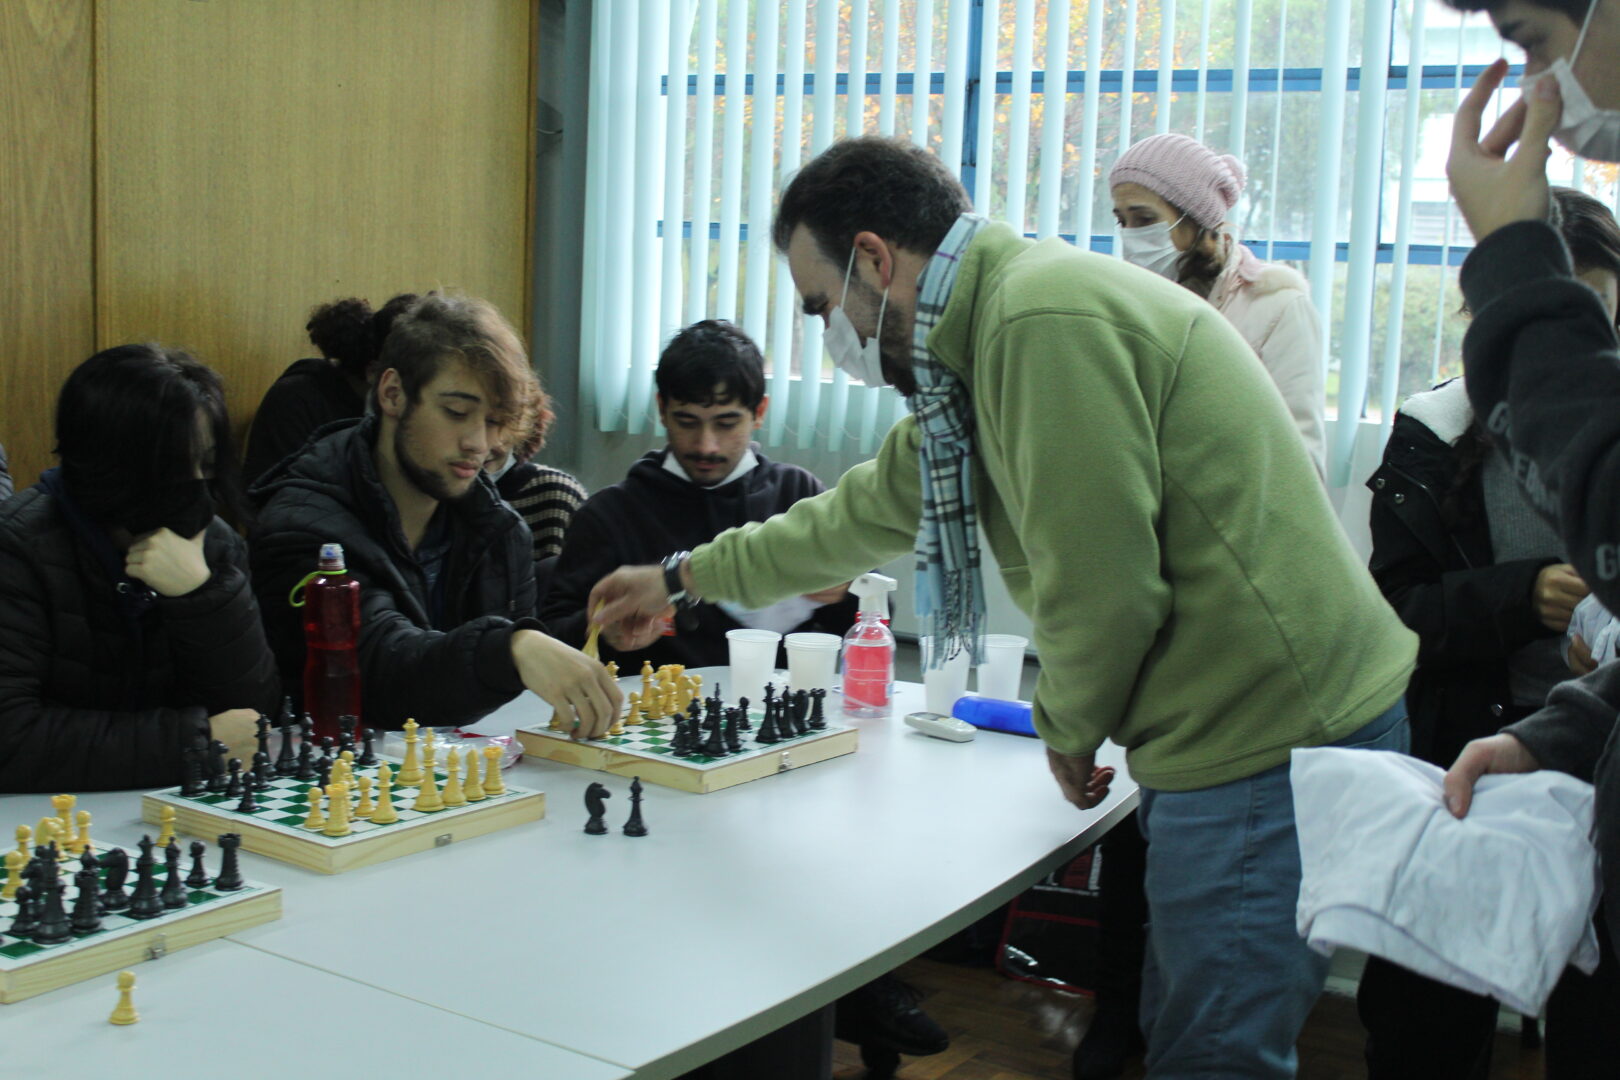 Realizada a 1ª Oficina de Xadrez para iniciantes no IFRS Campus Erechim -  Campus Erechim